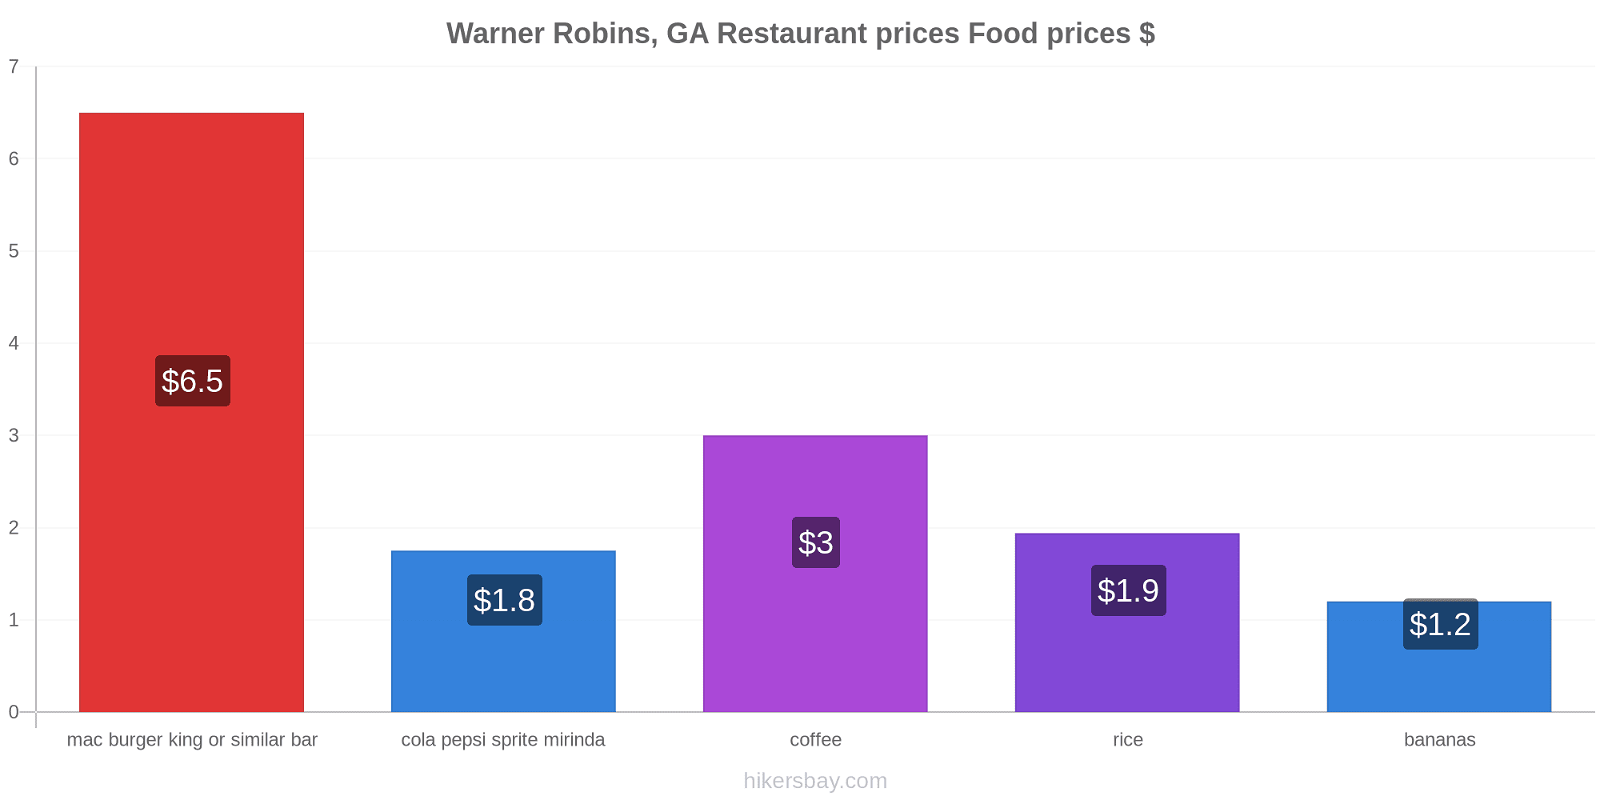 Warner Robins, GA price changes hikersbay.com